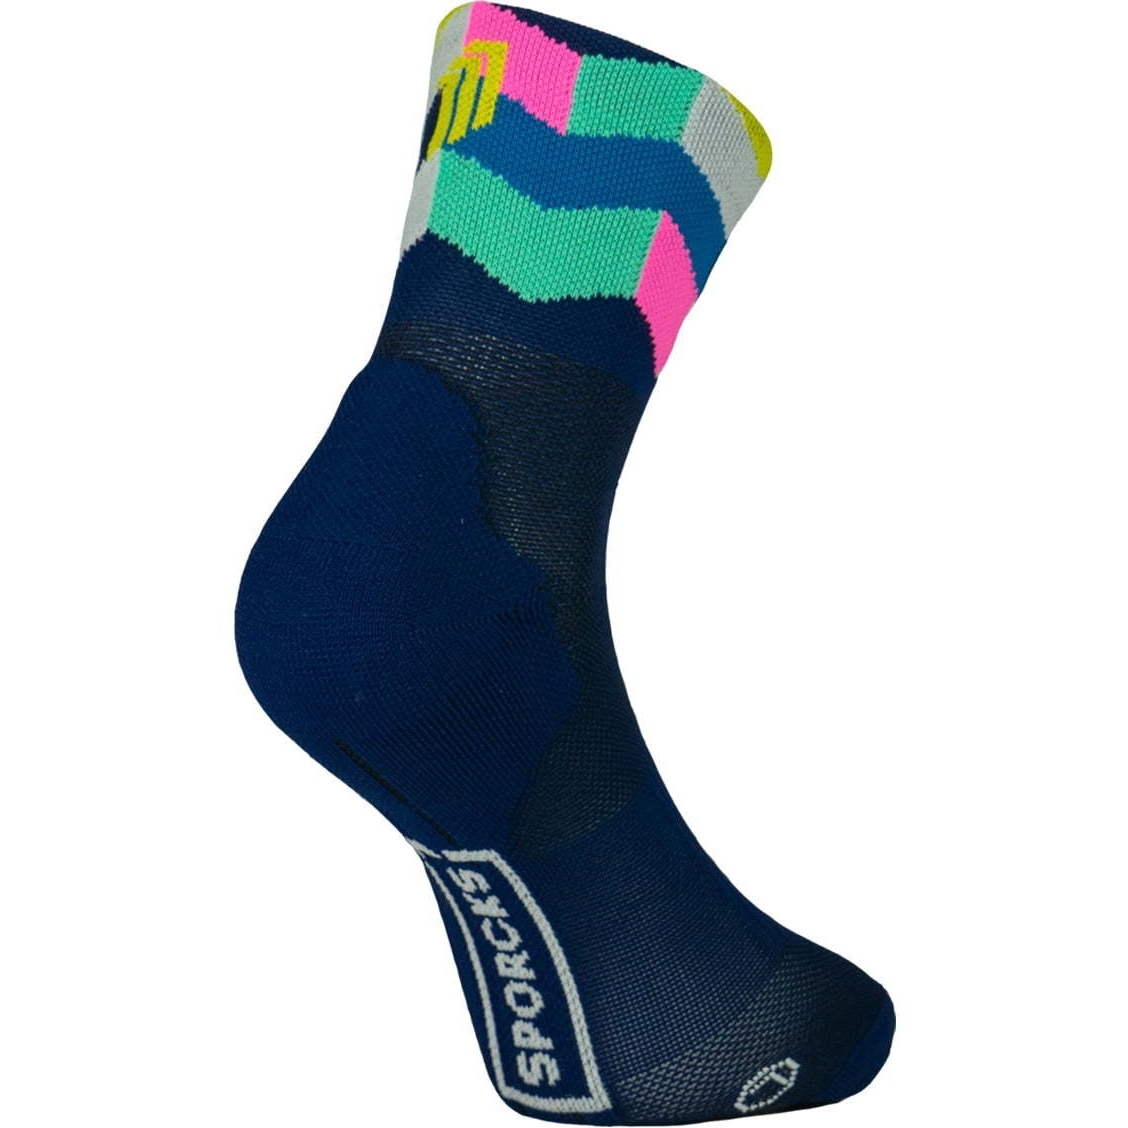 Produktbild von SPORCKS Triathlon Socken - Art Blue